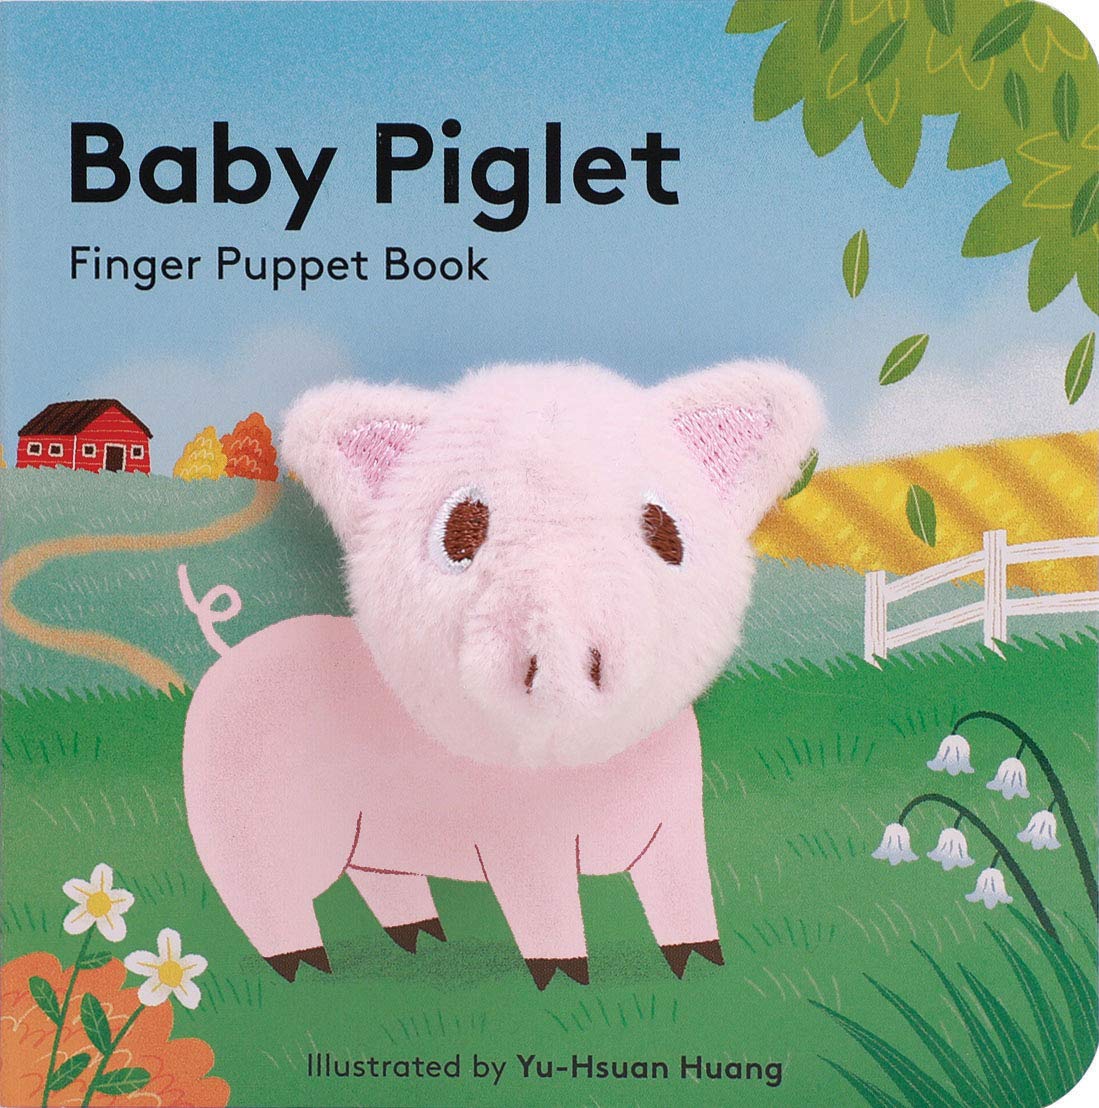 "Baby Piglet" Finger Puppet Book